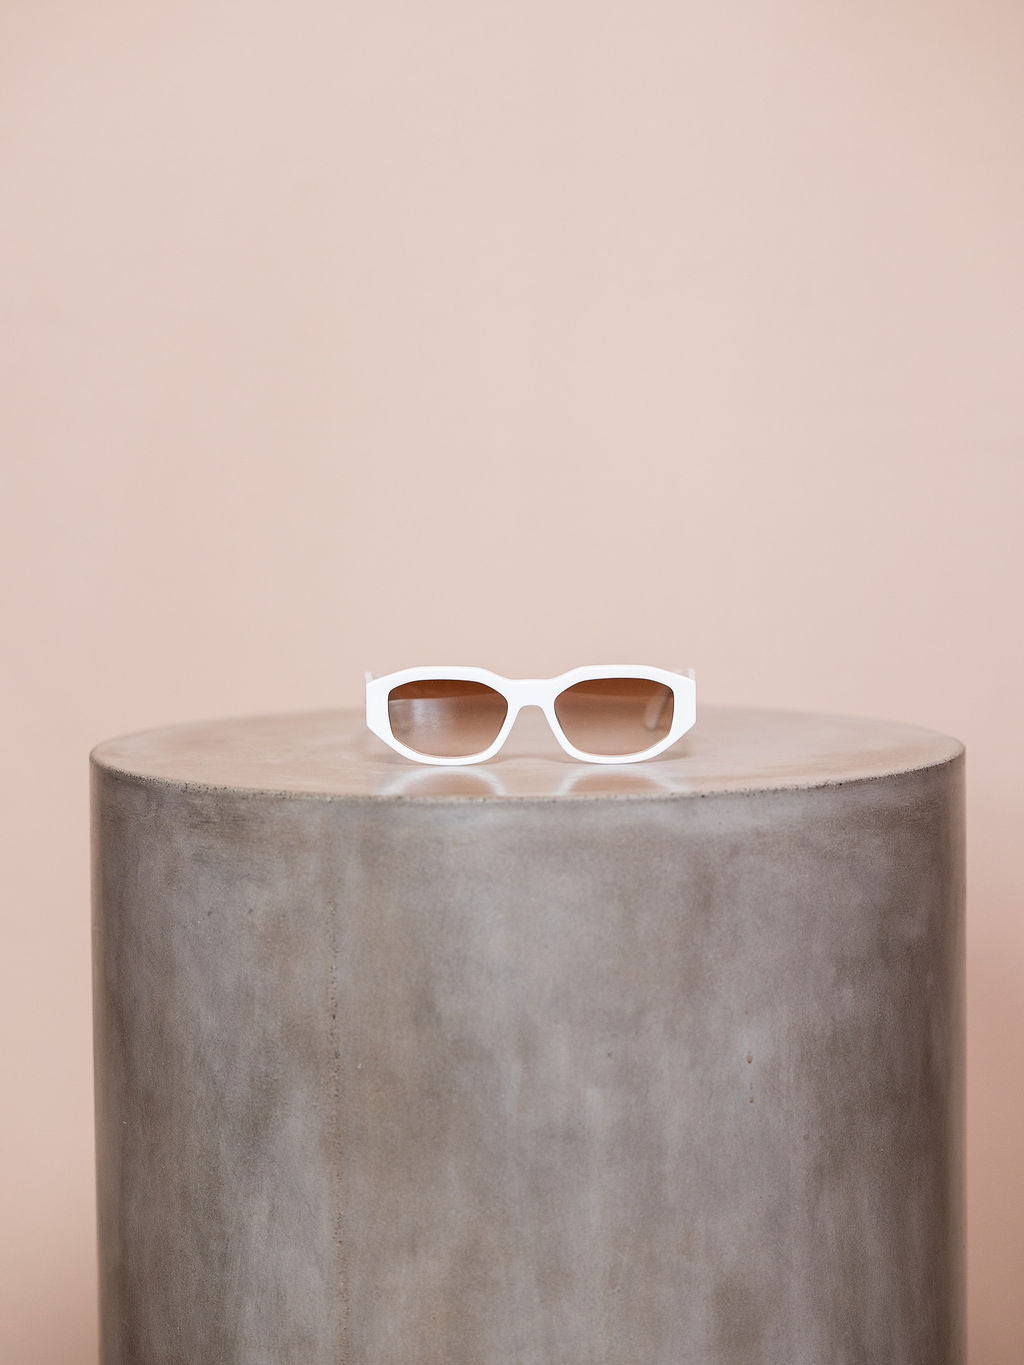 White sunglasses on podium against pink background